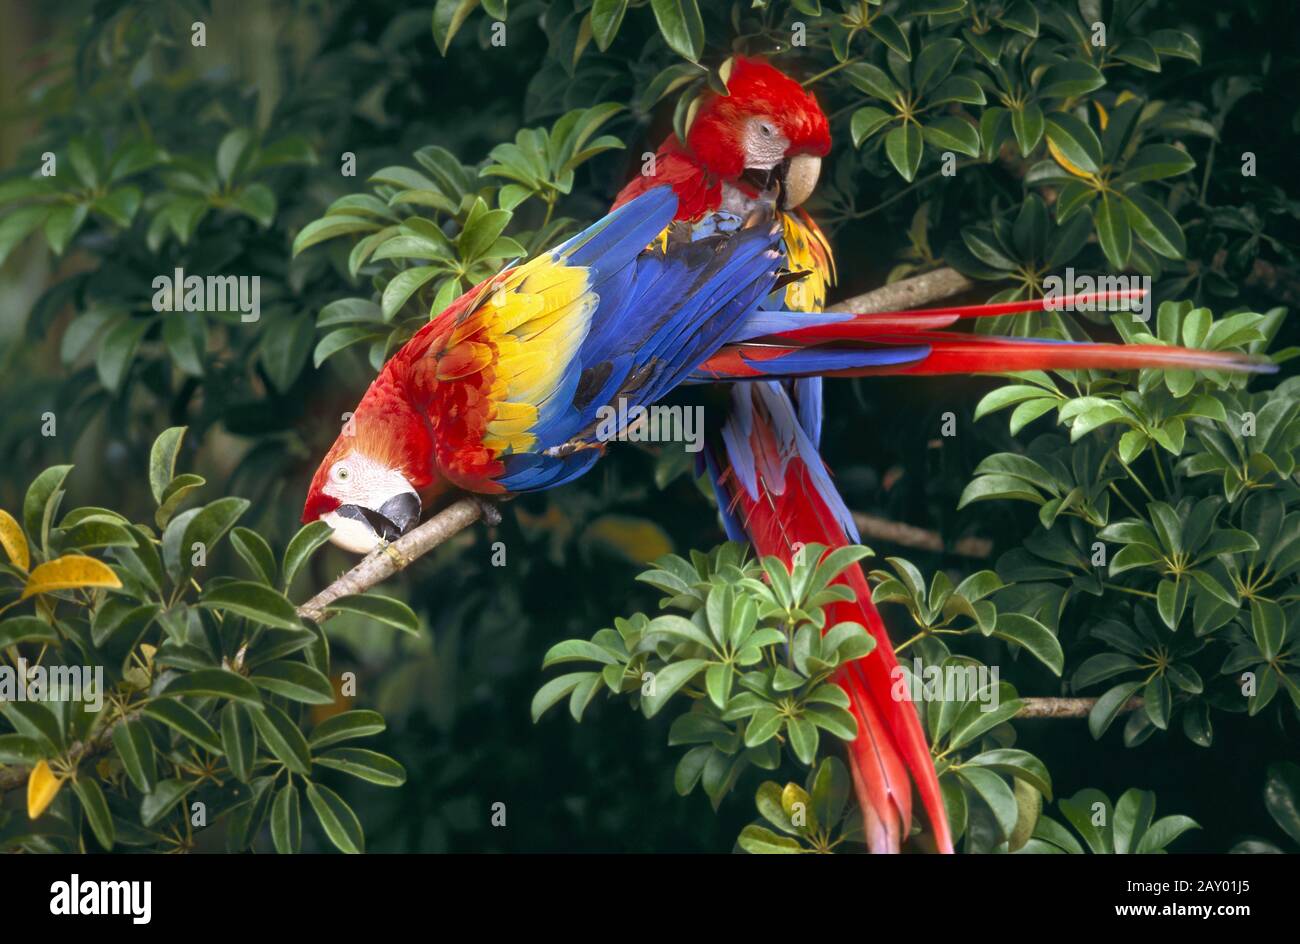 Ara Hellroter, arakanga, macaw rouge et jaune, macaw de scarlet Banque D'Images